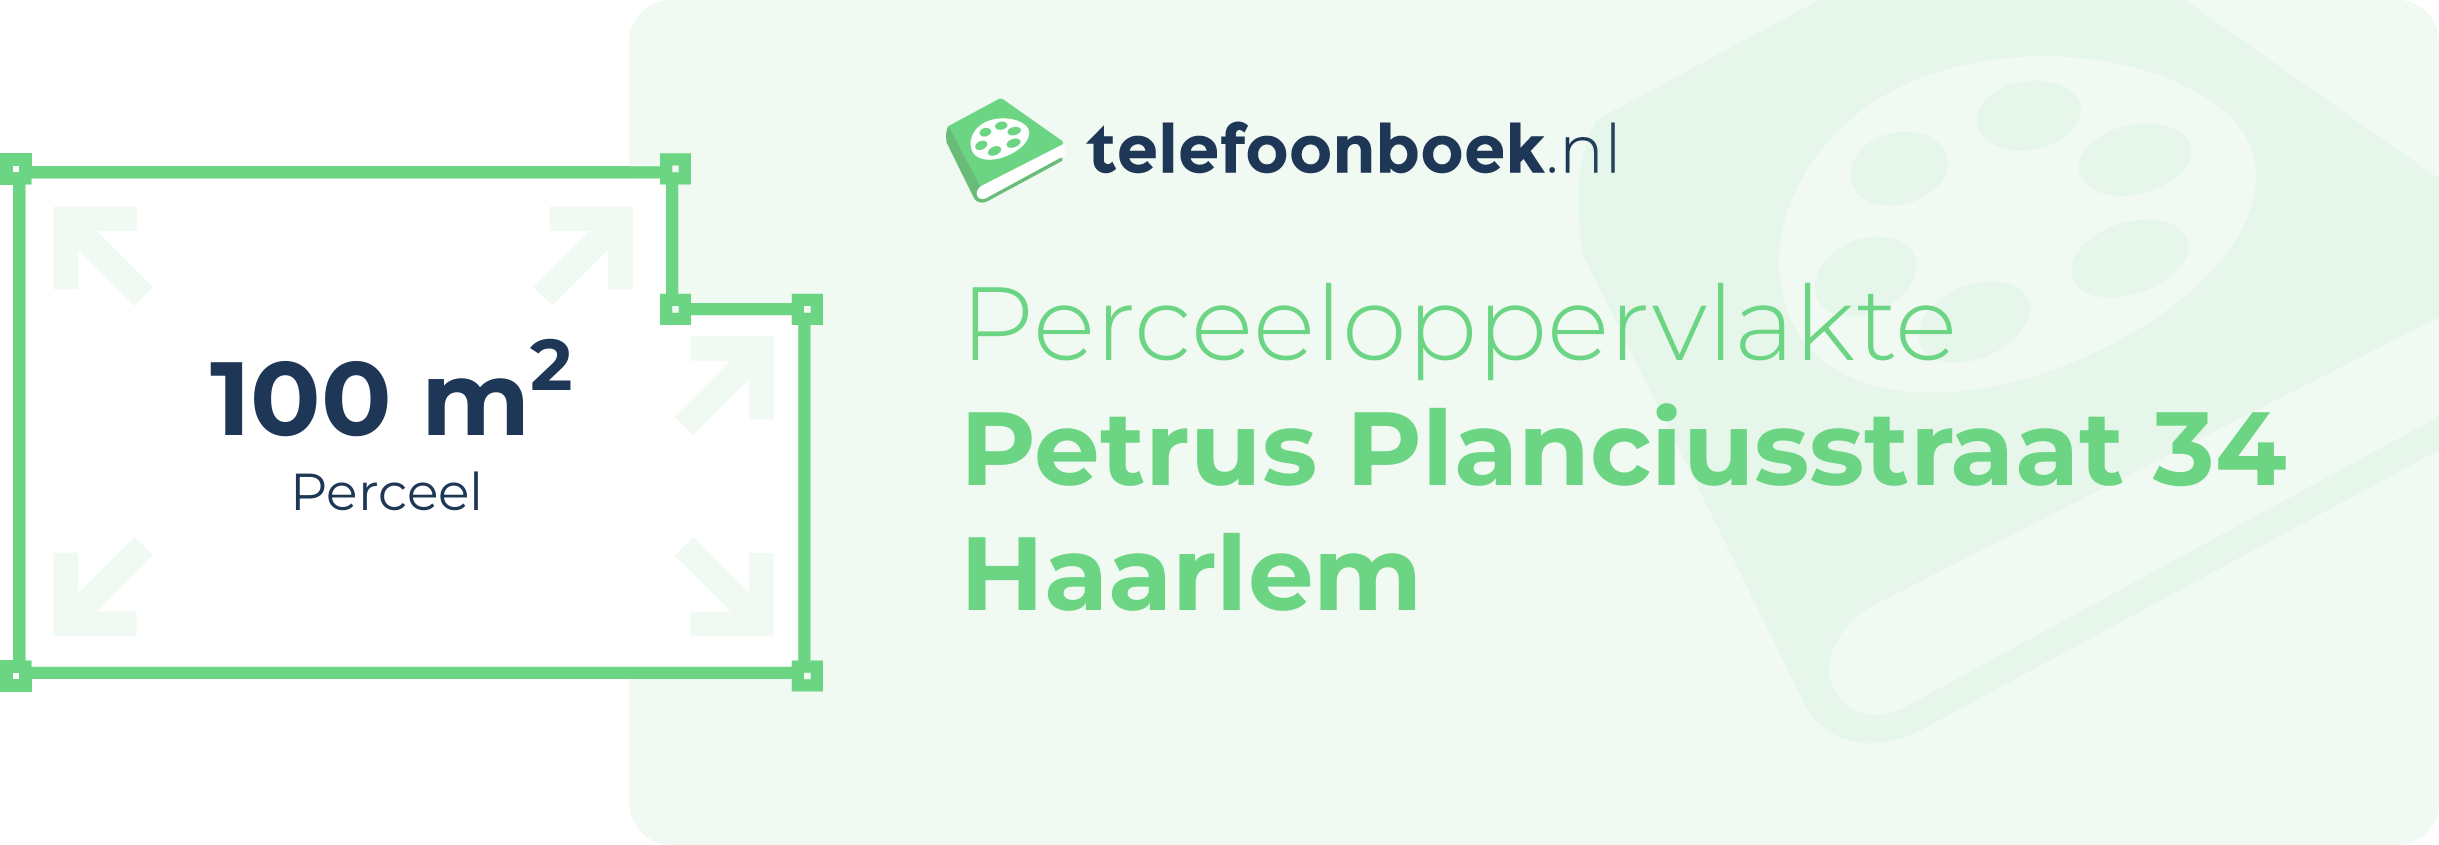 Perceeloppervlakte Petrus Planciusstraat 34 Haarlem